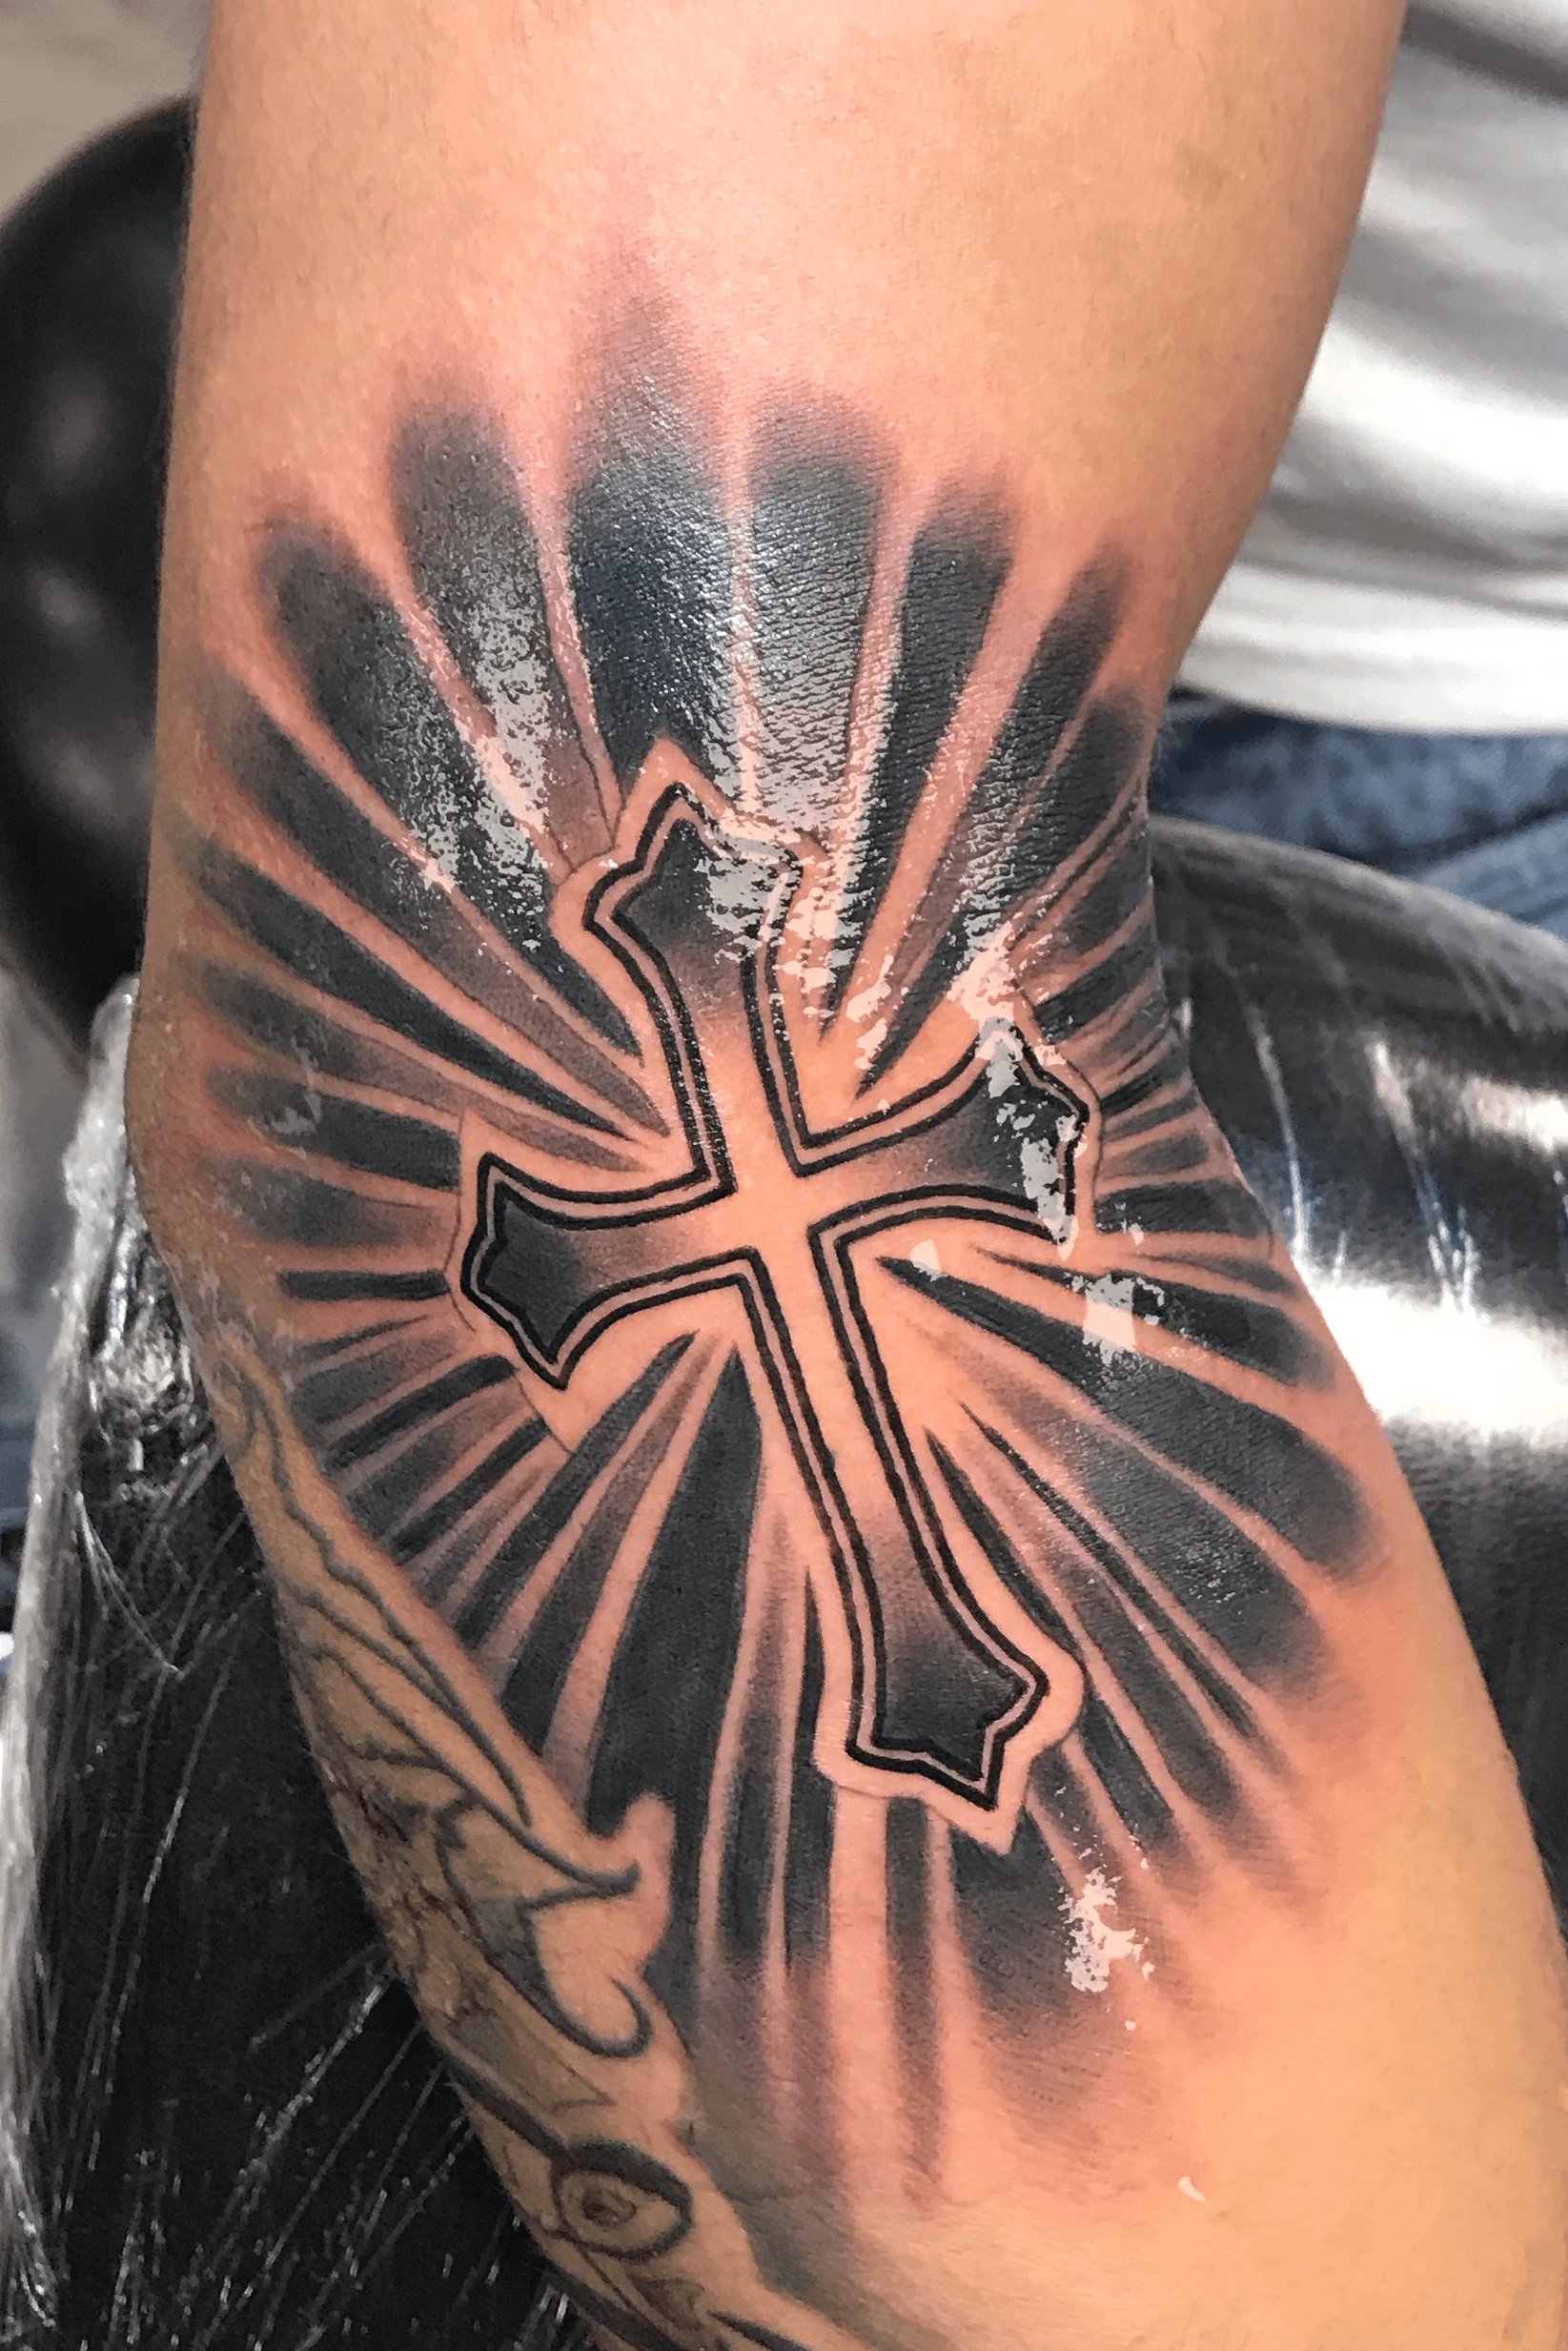 Tattoo Cross w light effects by FidesCaritasSpes on DeviantArt